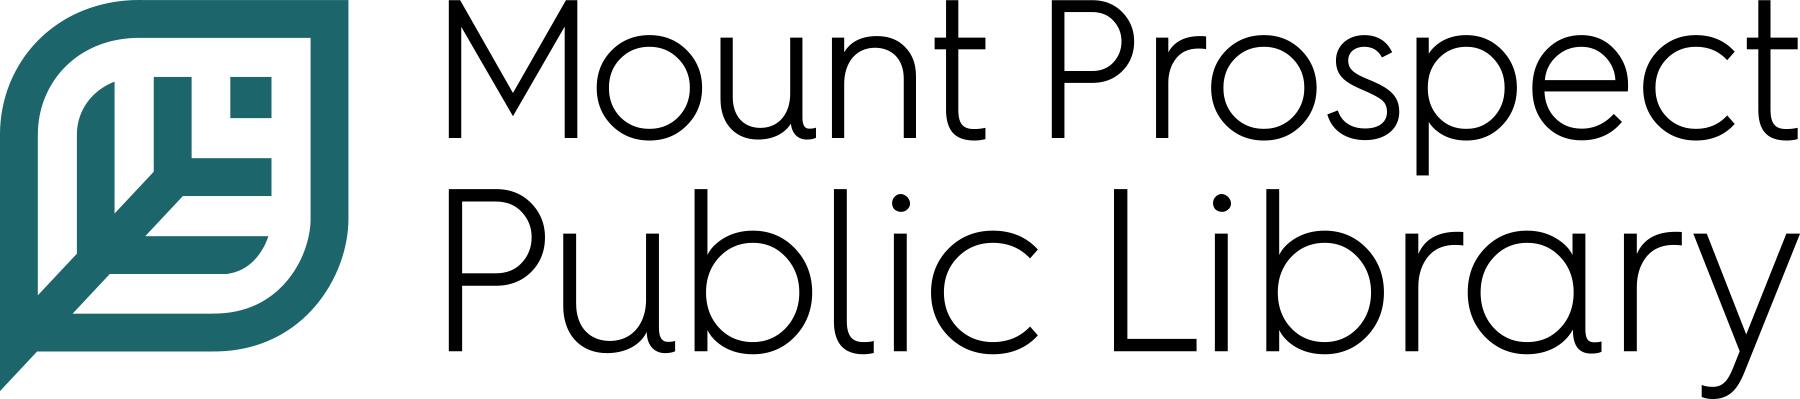 Mount Prospect Public Library: Explore the Possibilities